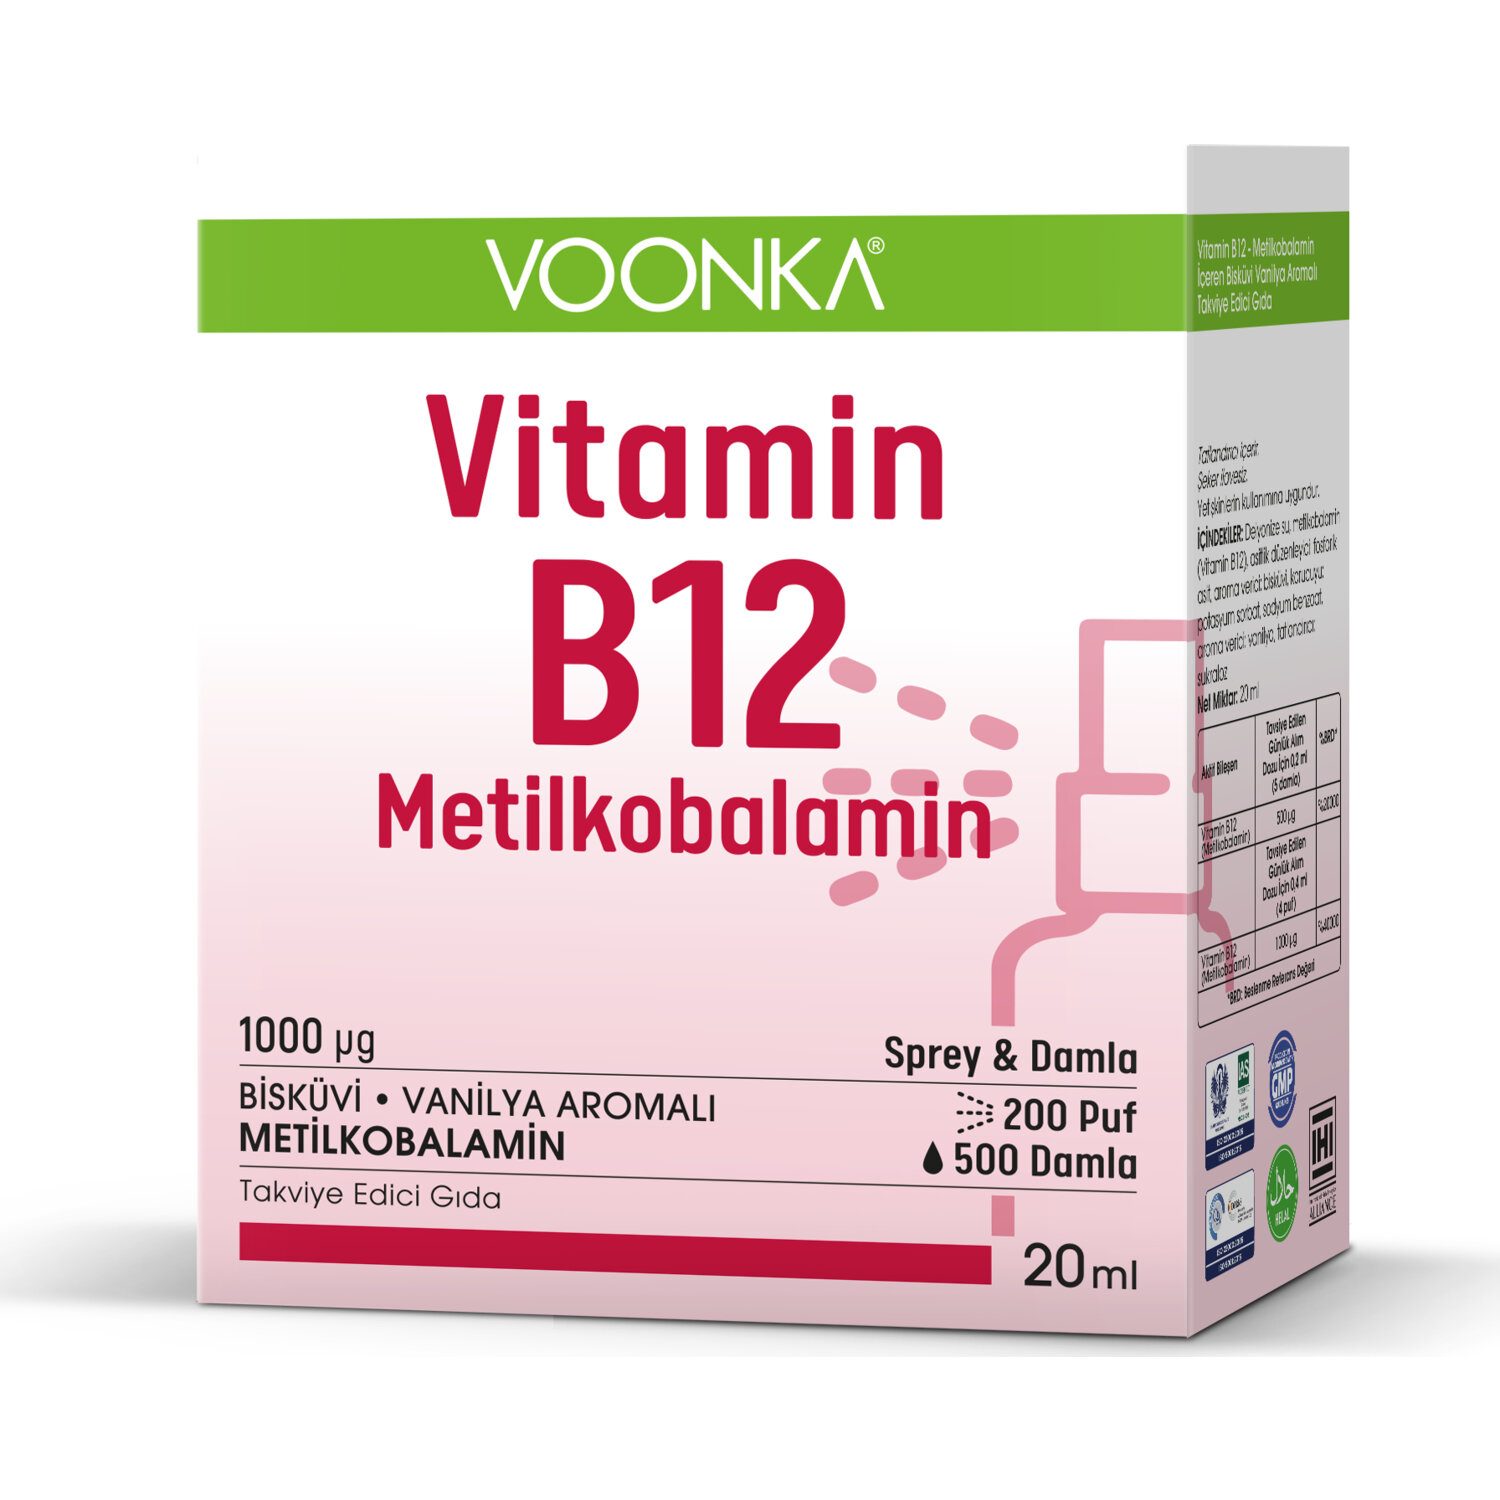 Voonka Vitamin B12 Metilkobalamin Damla Sprey 20 Ml Fiyati